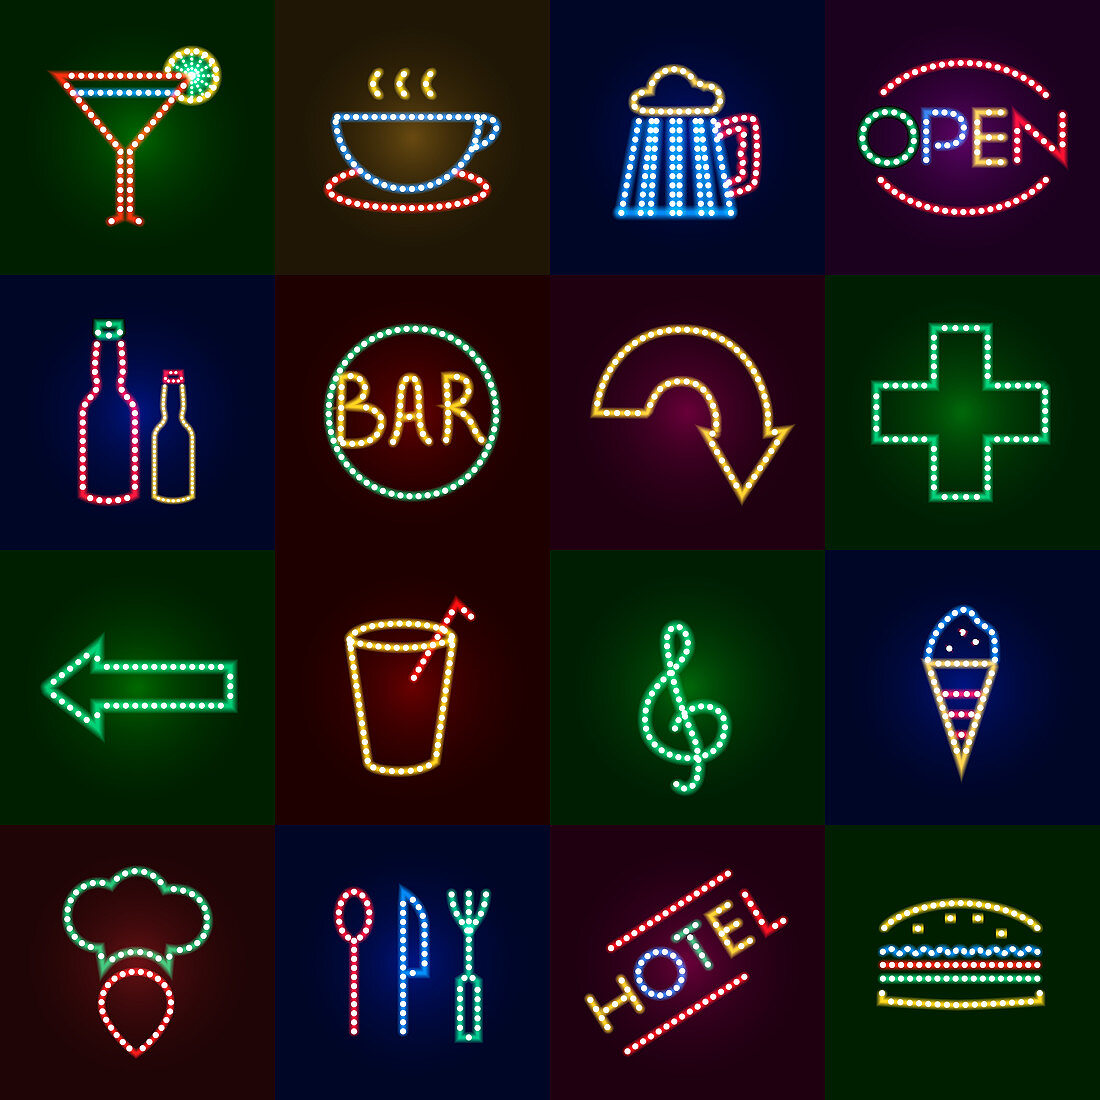 Neon sign icons, illustration